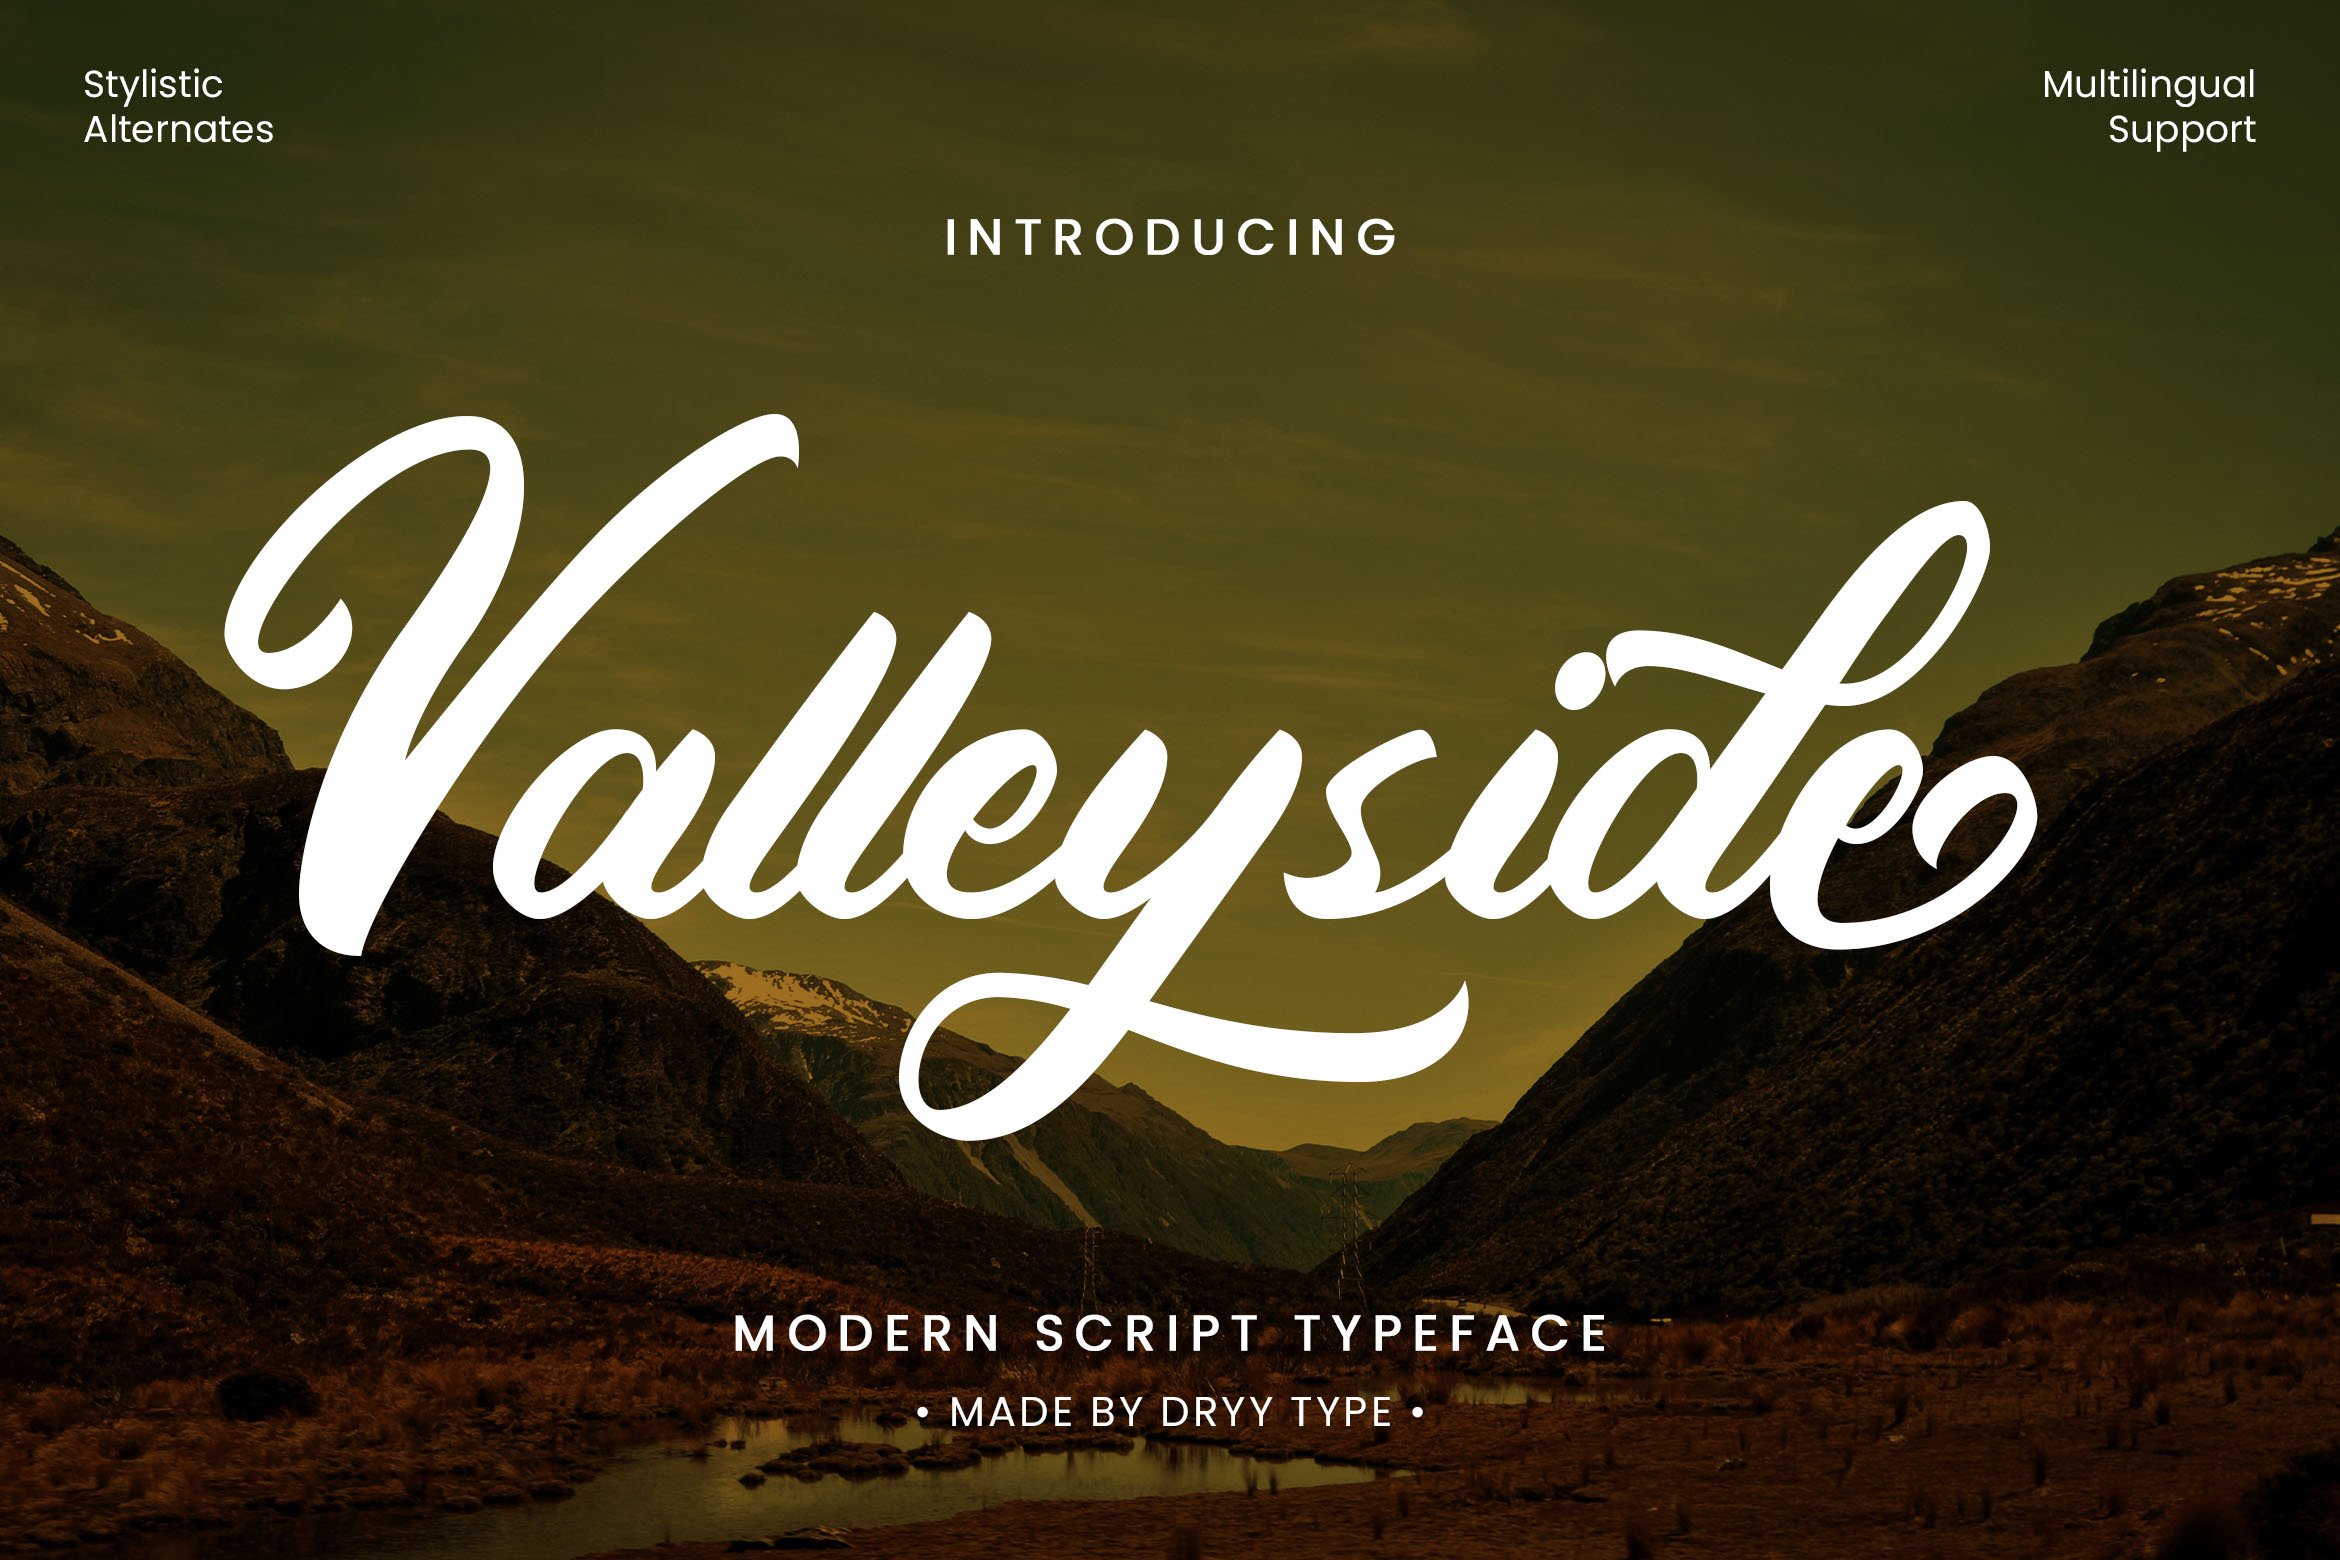 Valleyside Font - Design Cuts